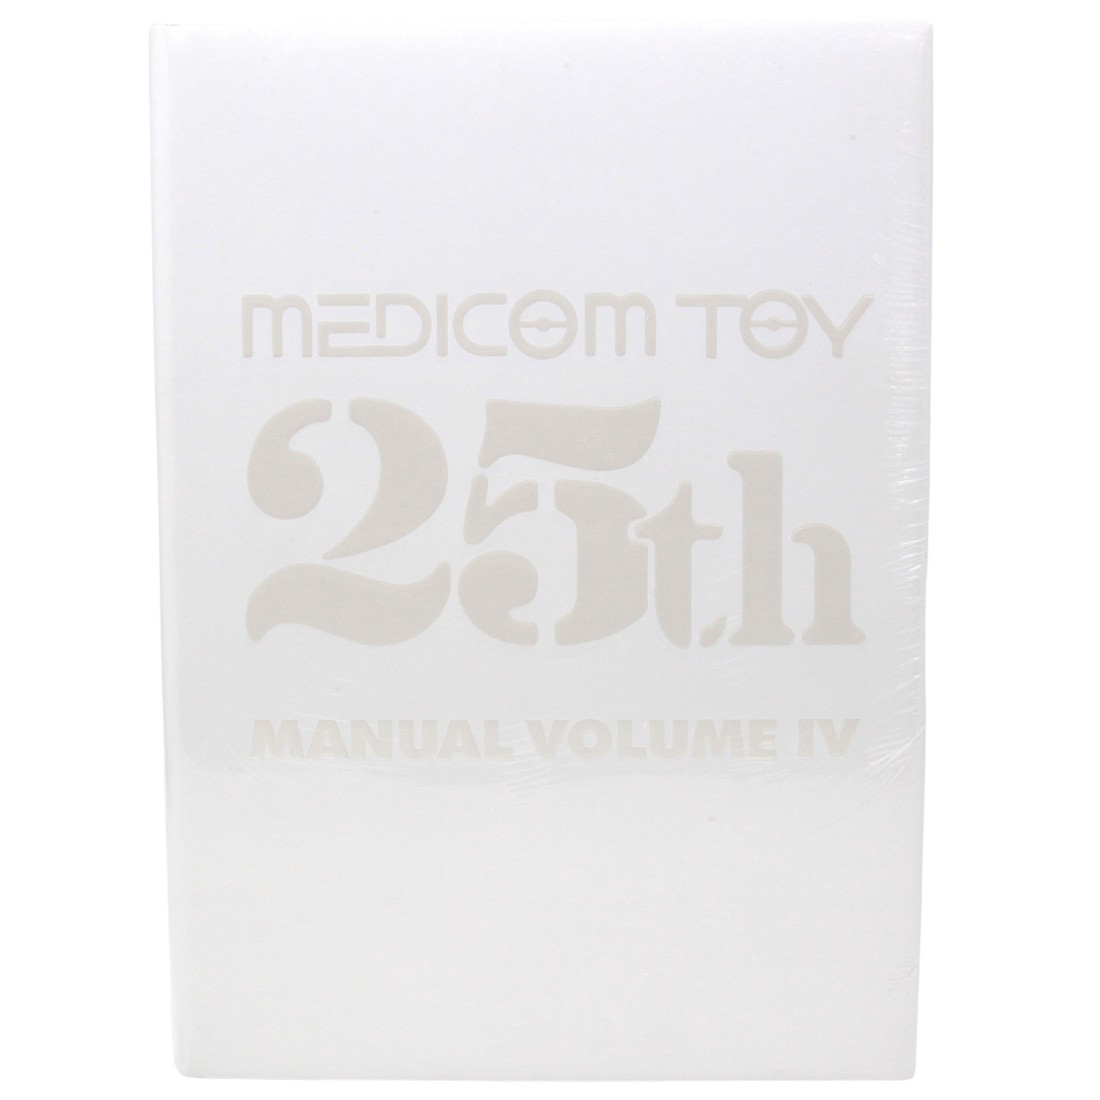 Medicom Toy 25th Anniversary Book - Manual Volume IV white